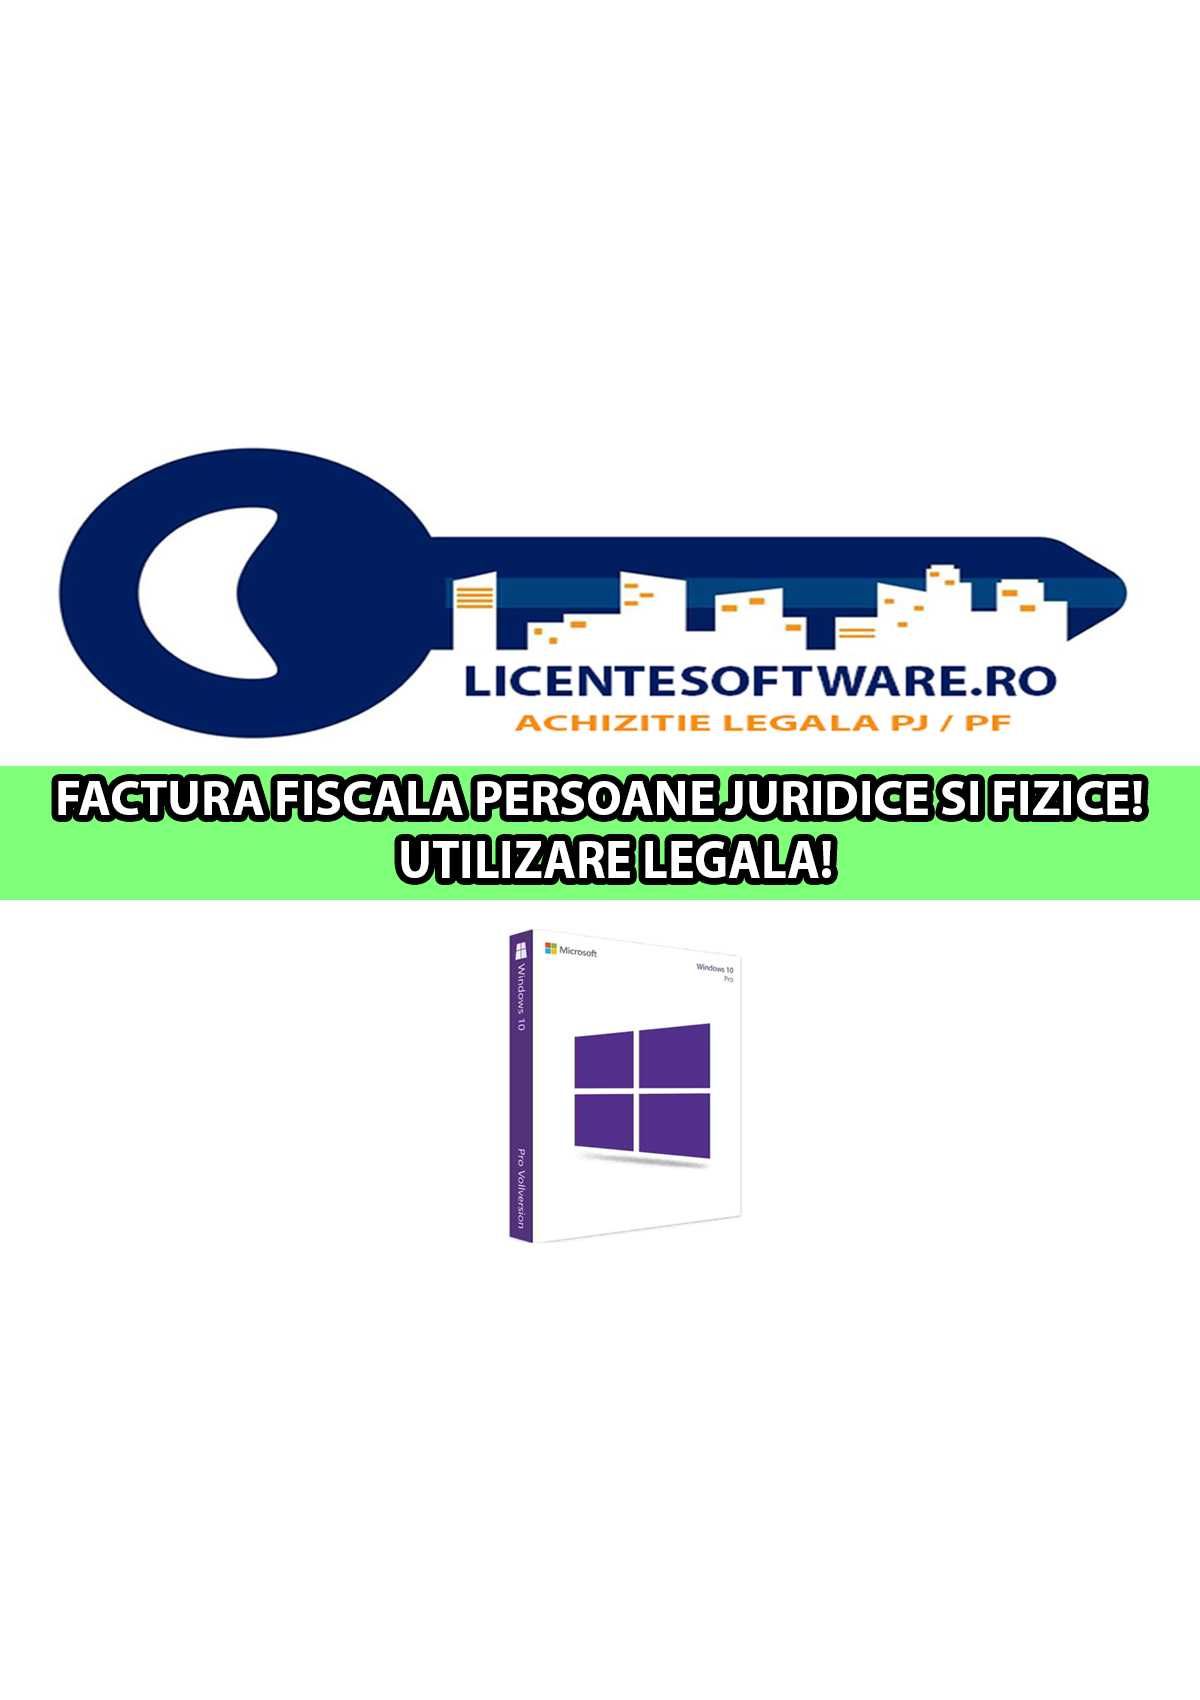 Licente Retail: Windows 10 Pro / Home - Legal pentru PJ / PF!